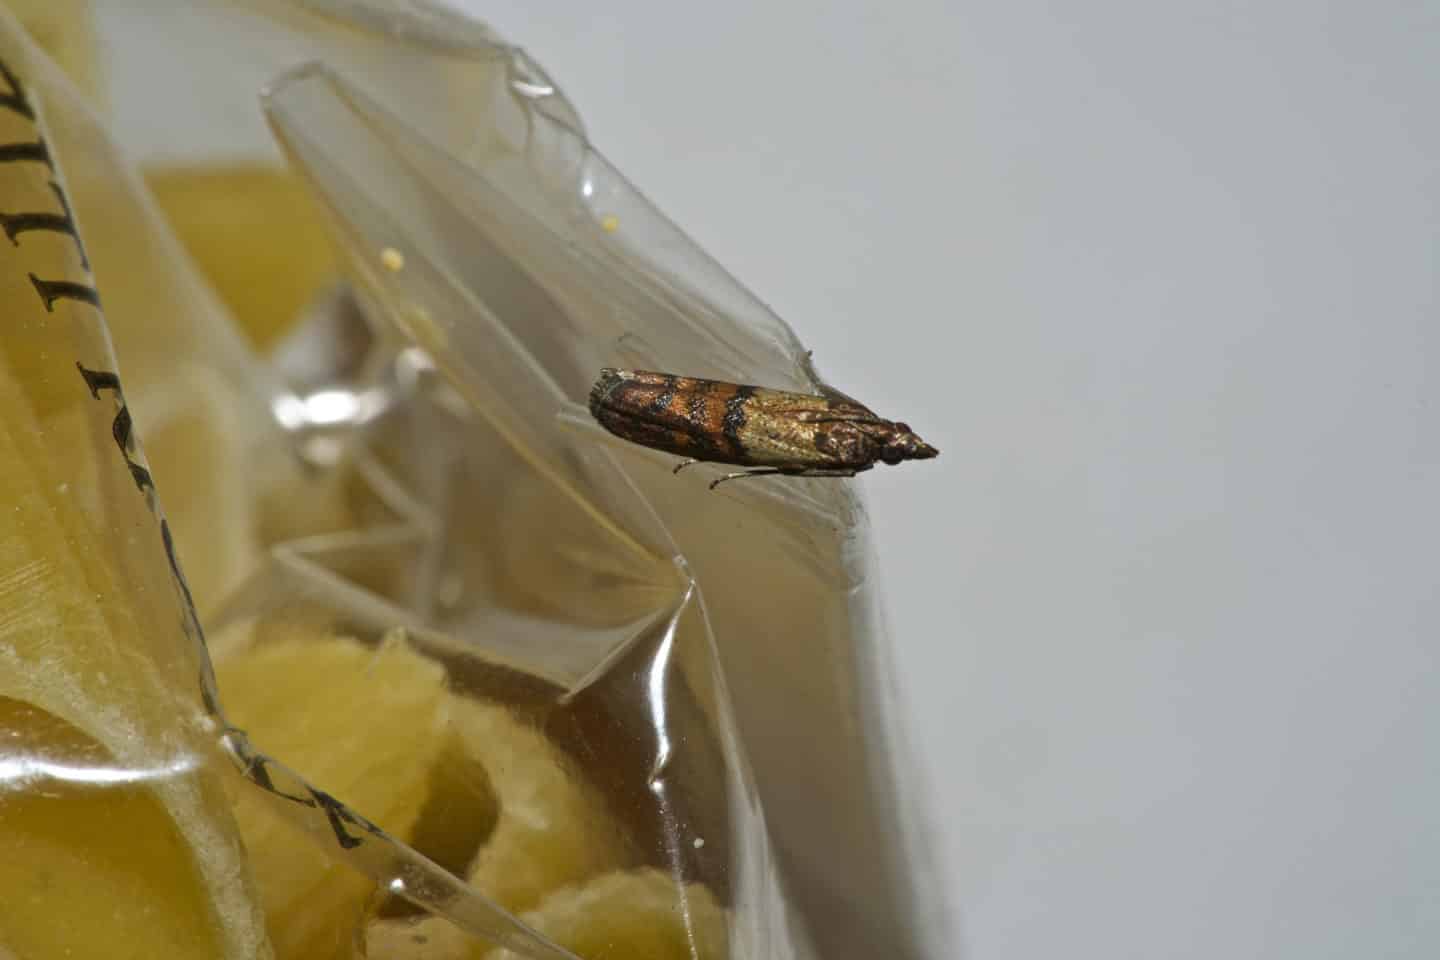 Indian Meal Moth / Pantry Moth